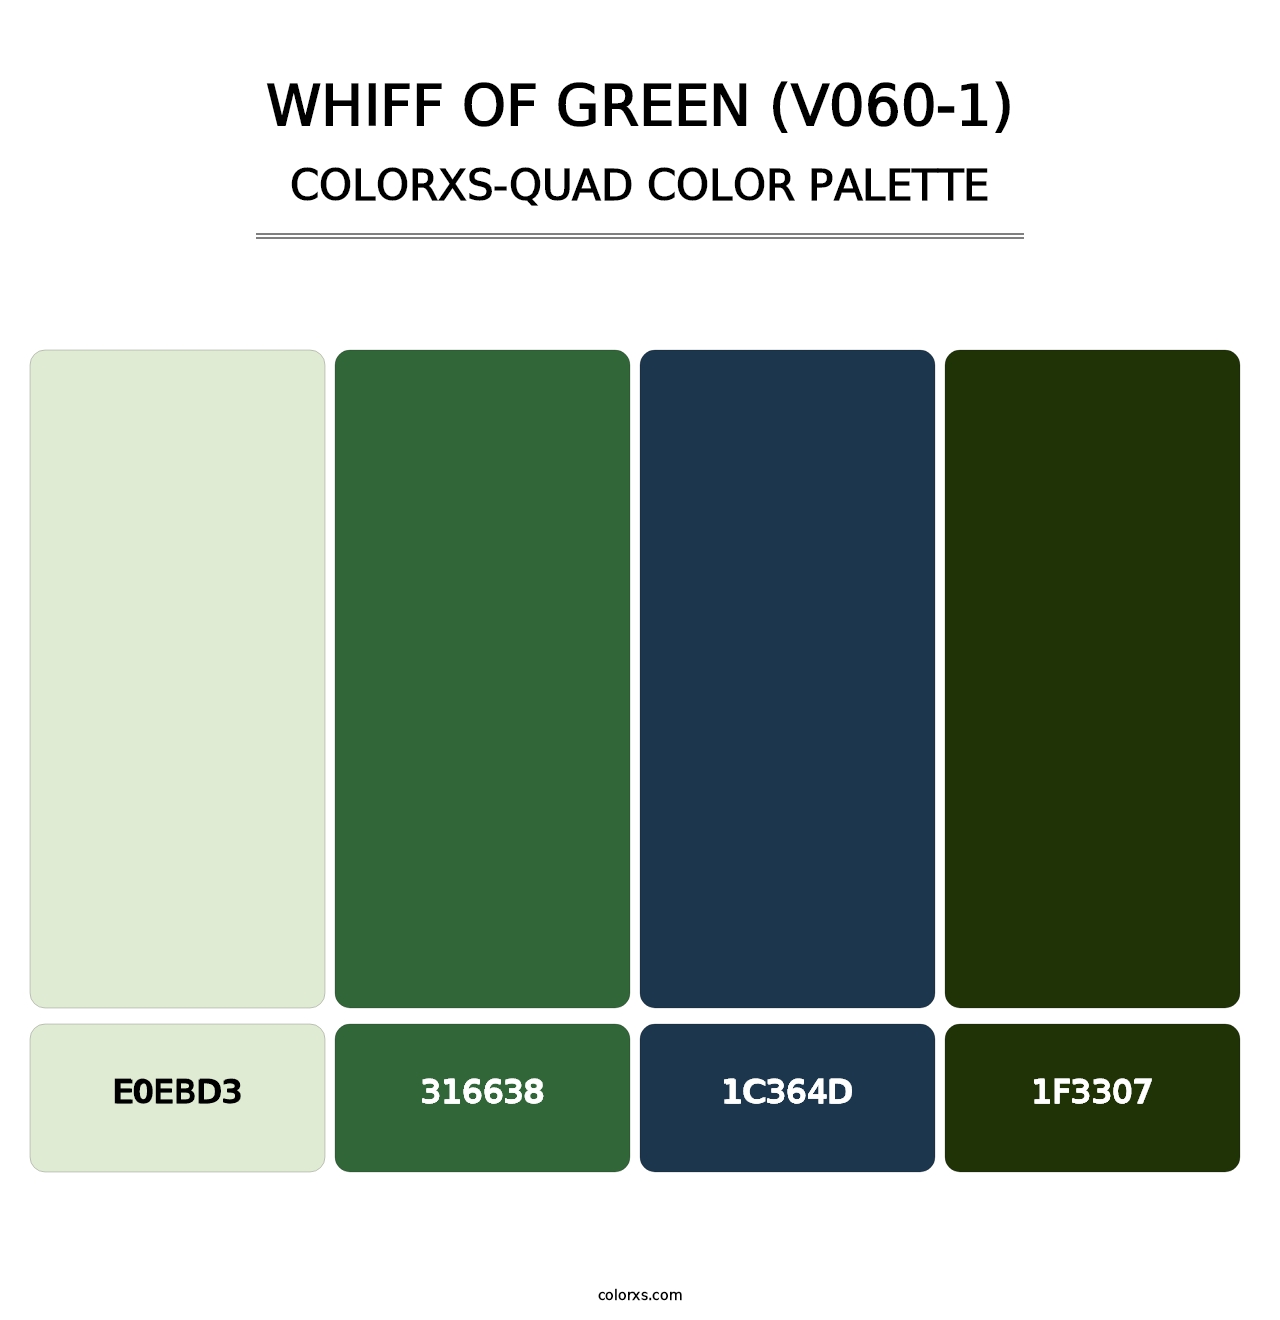 Whiff of Green (V060-1) - Colorxs Quad Palette